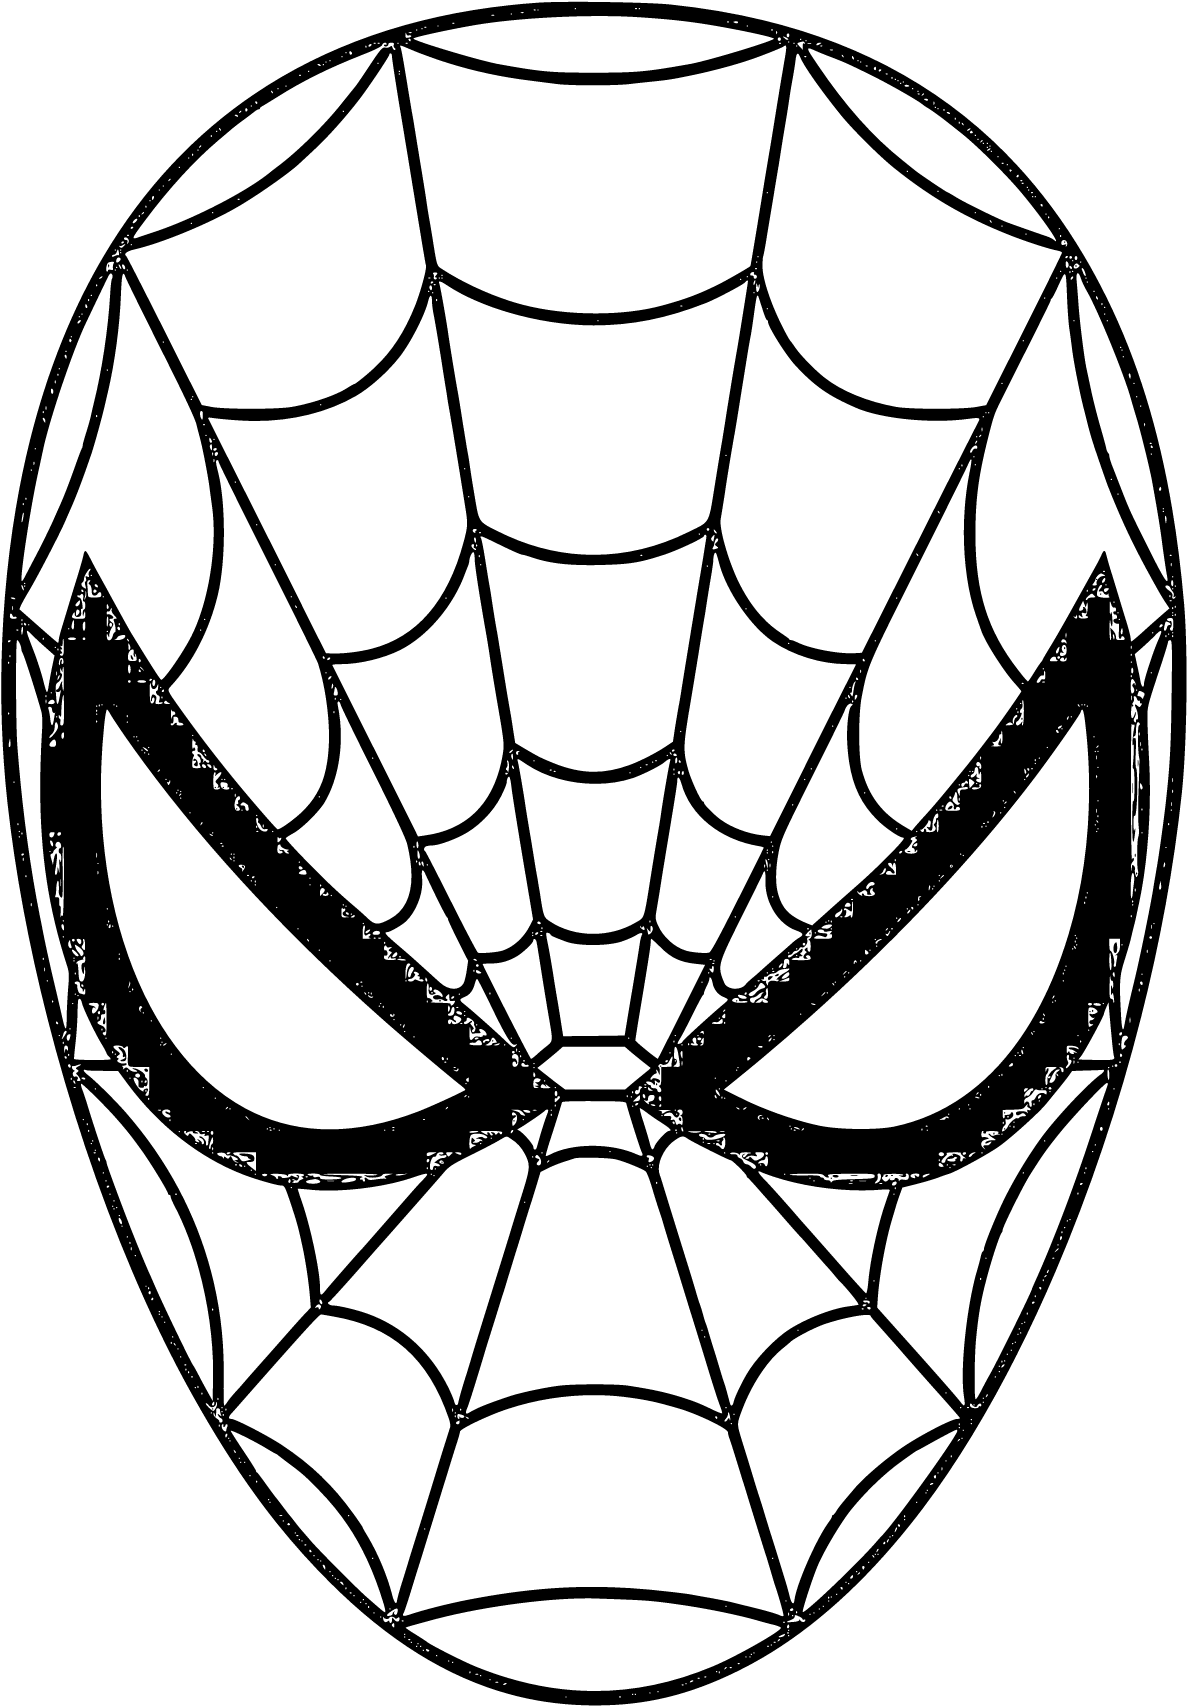 Spiderman Mask black white Coloring sheet for children - SheetalColor.com